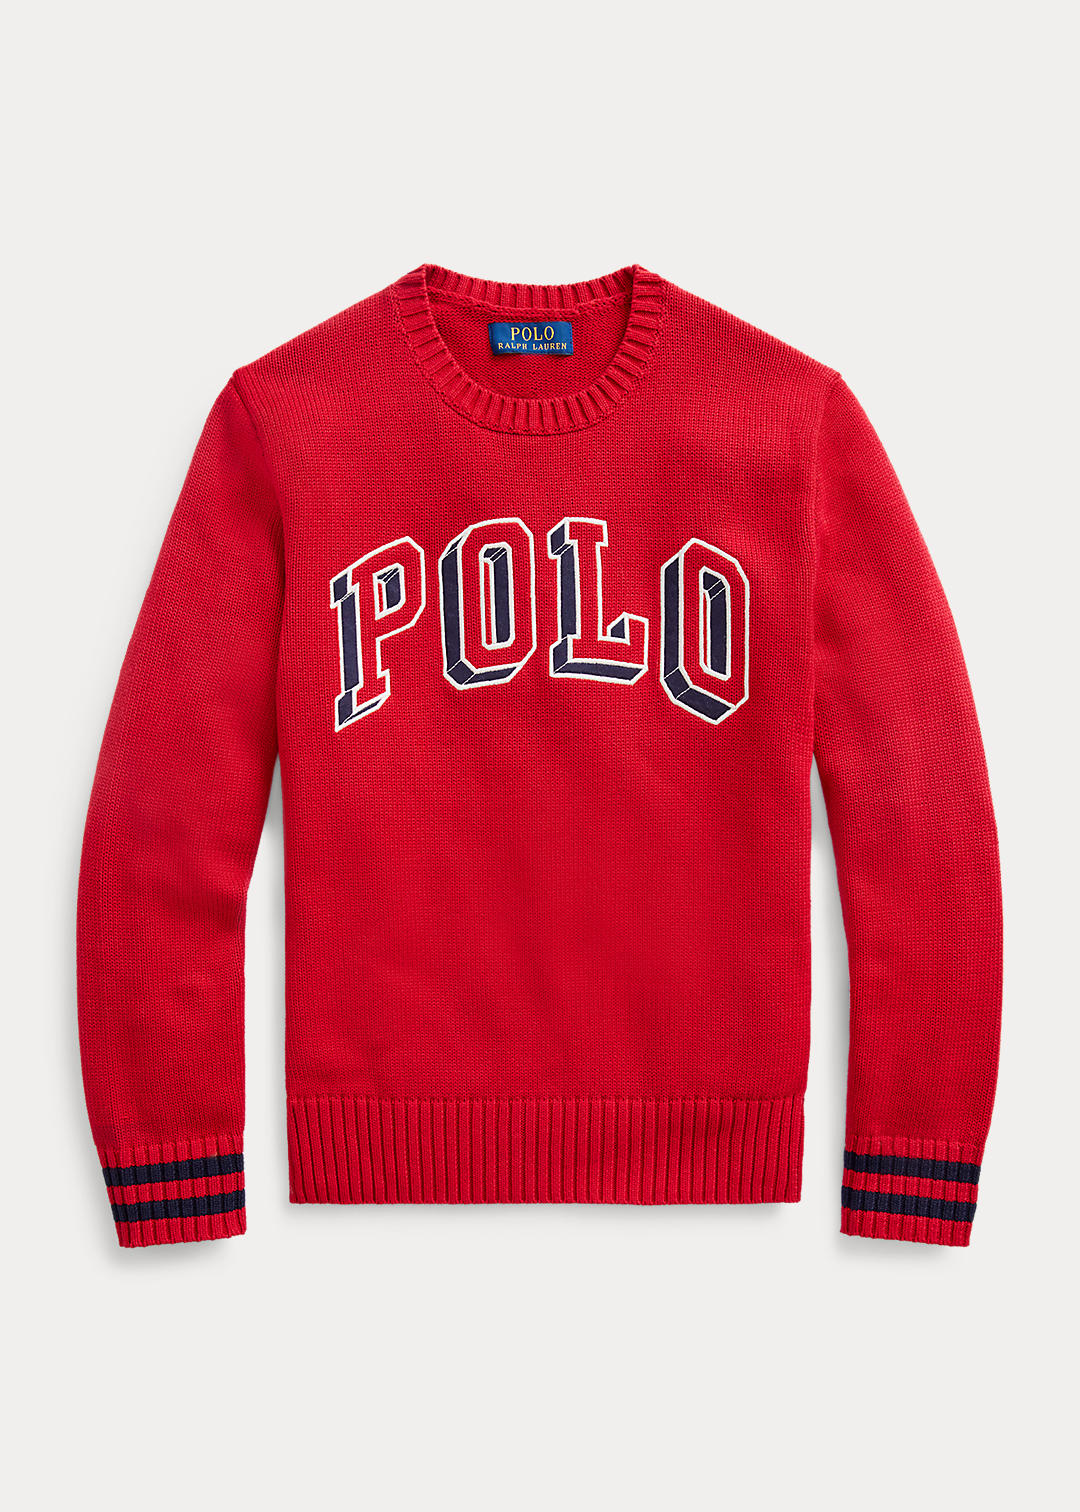 BOYS 6-14 YEARS Polo Cotton Crewneck Sweater 1